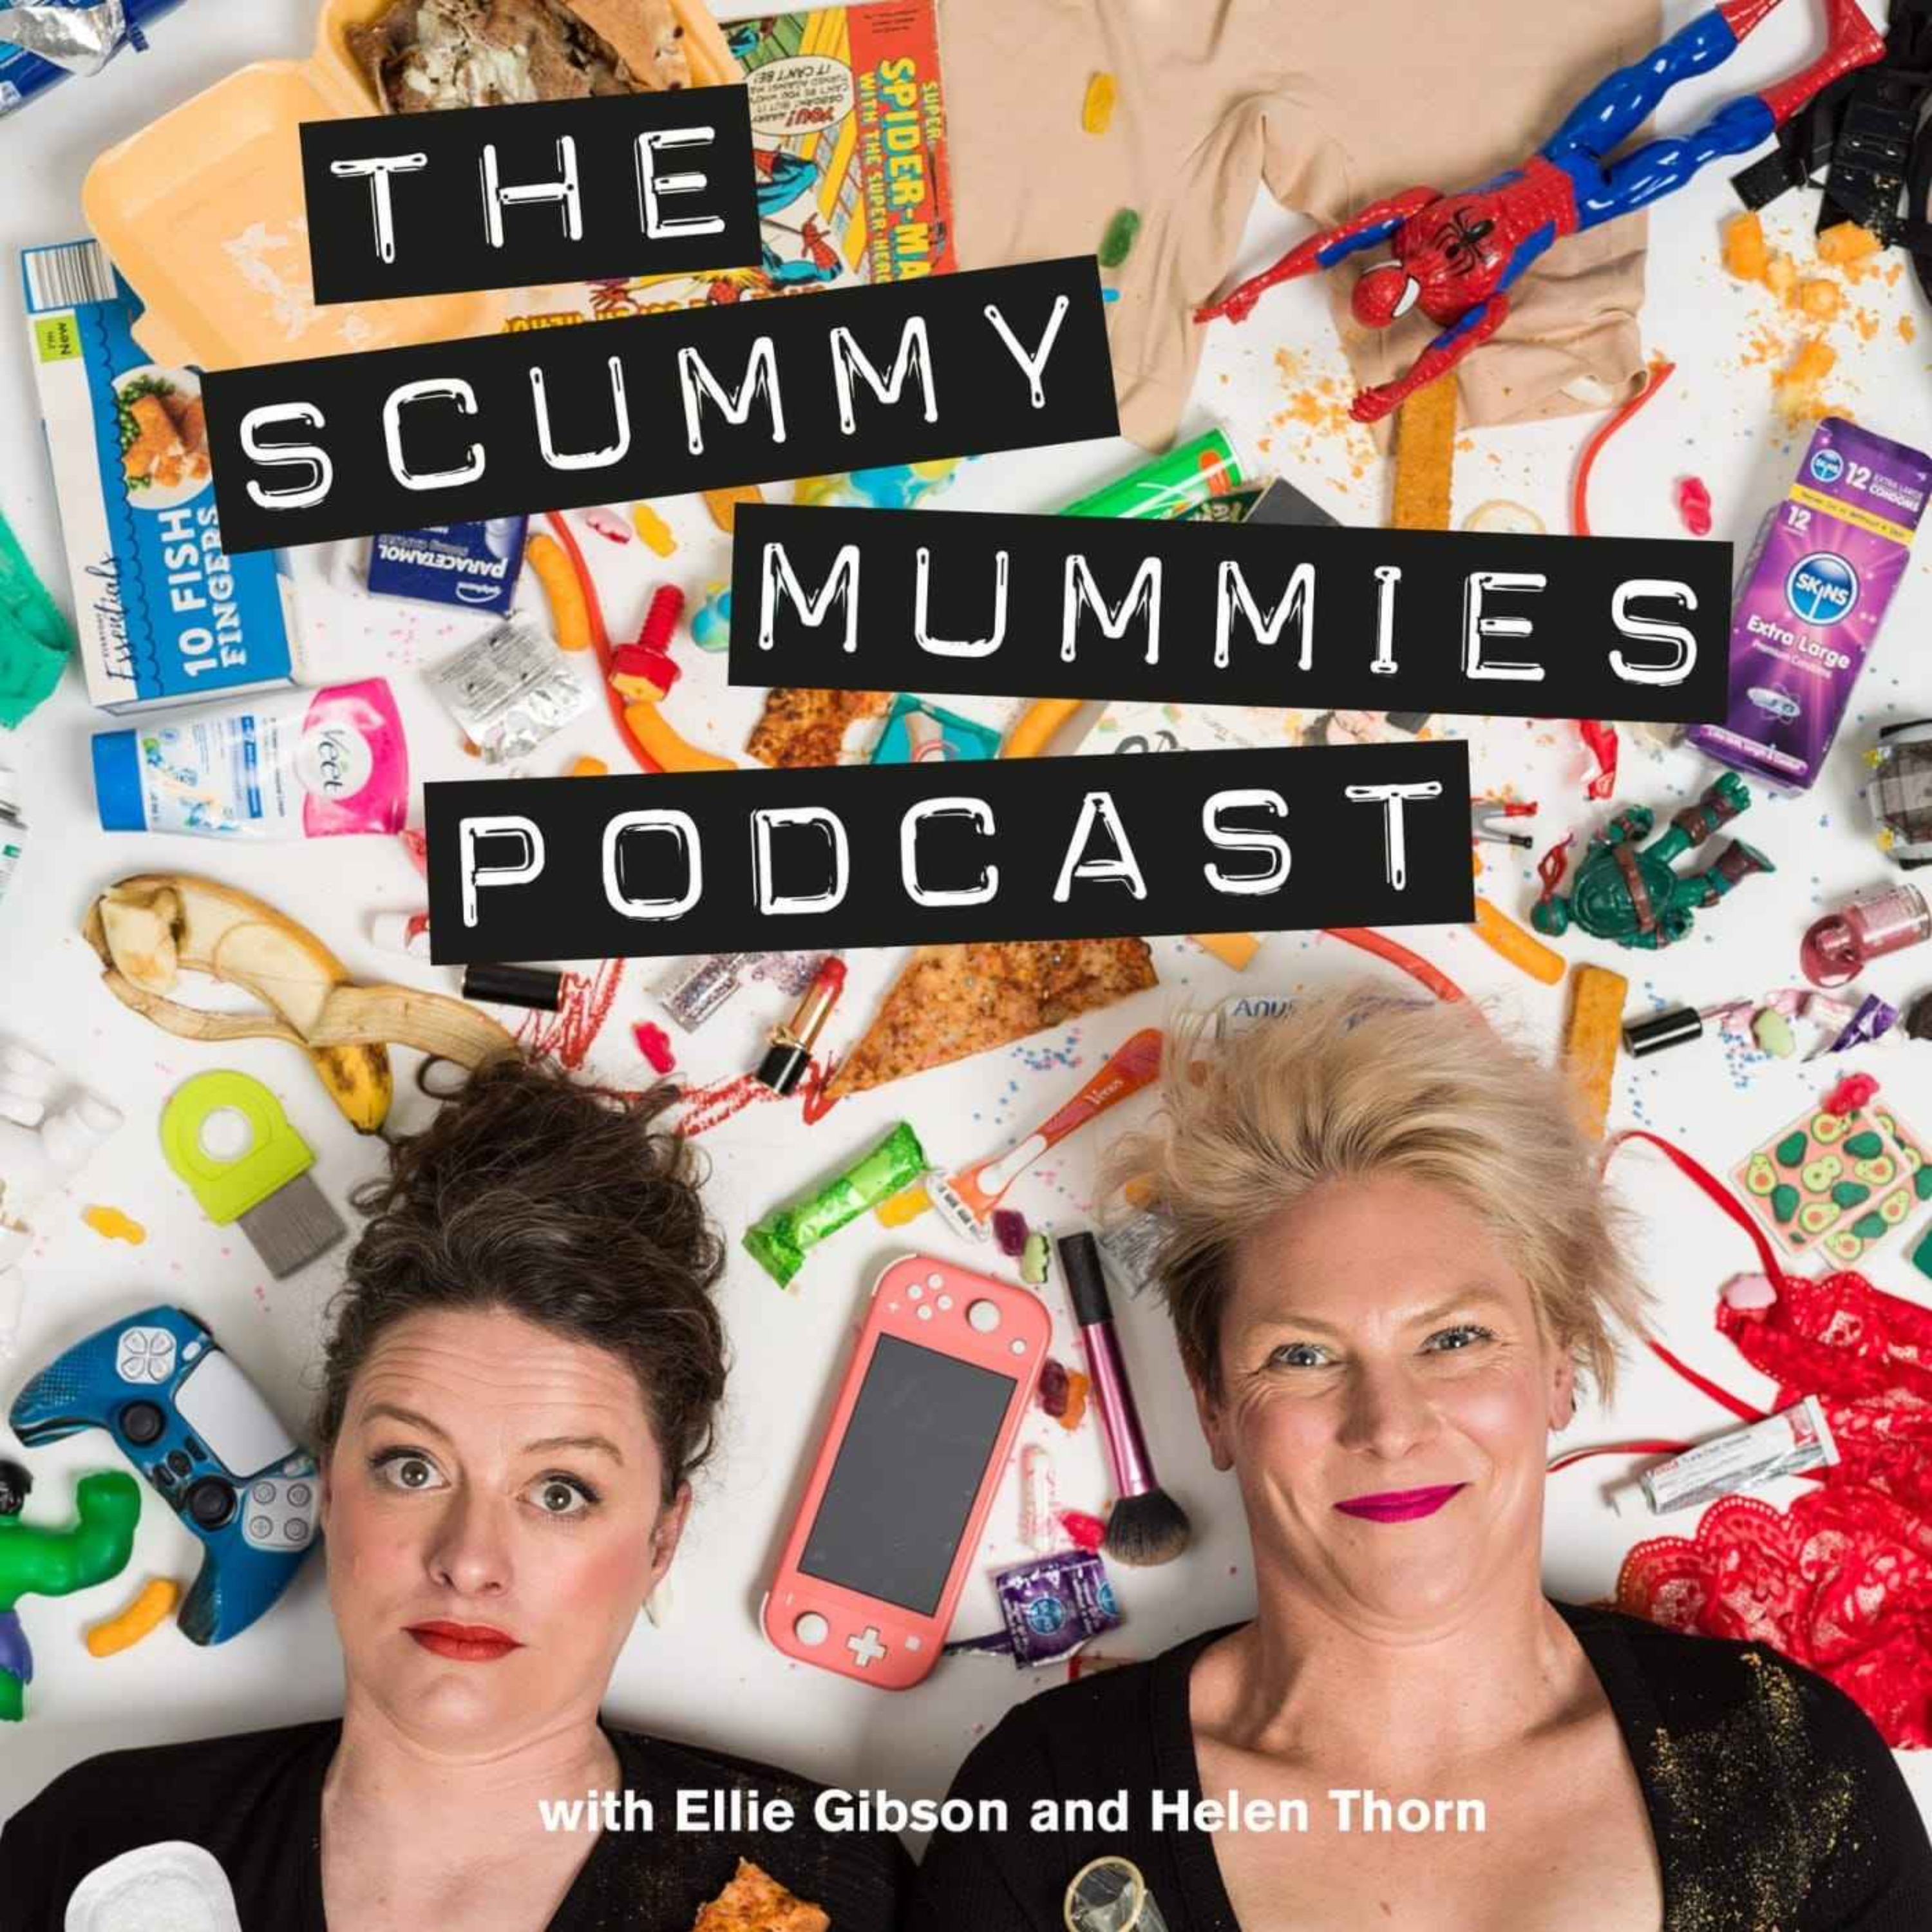 The Scummy Mummies Podcast podcast